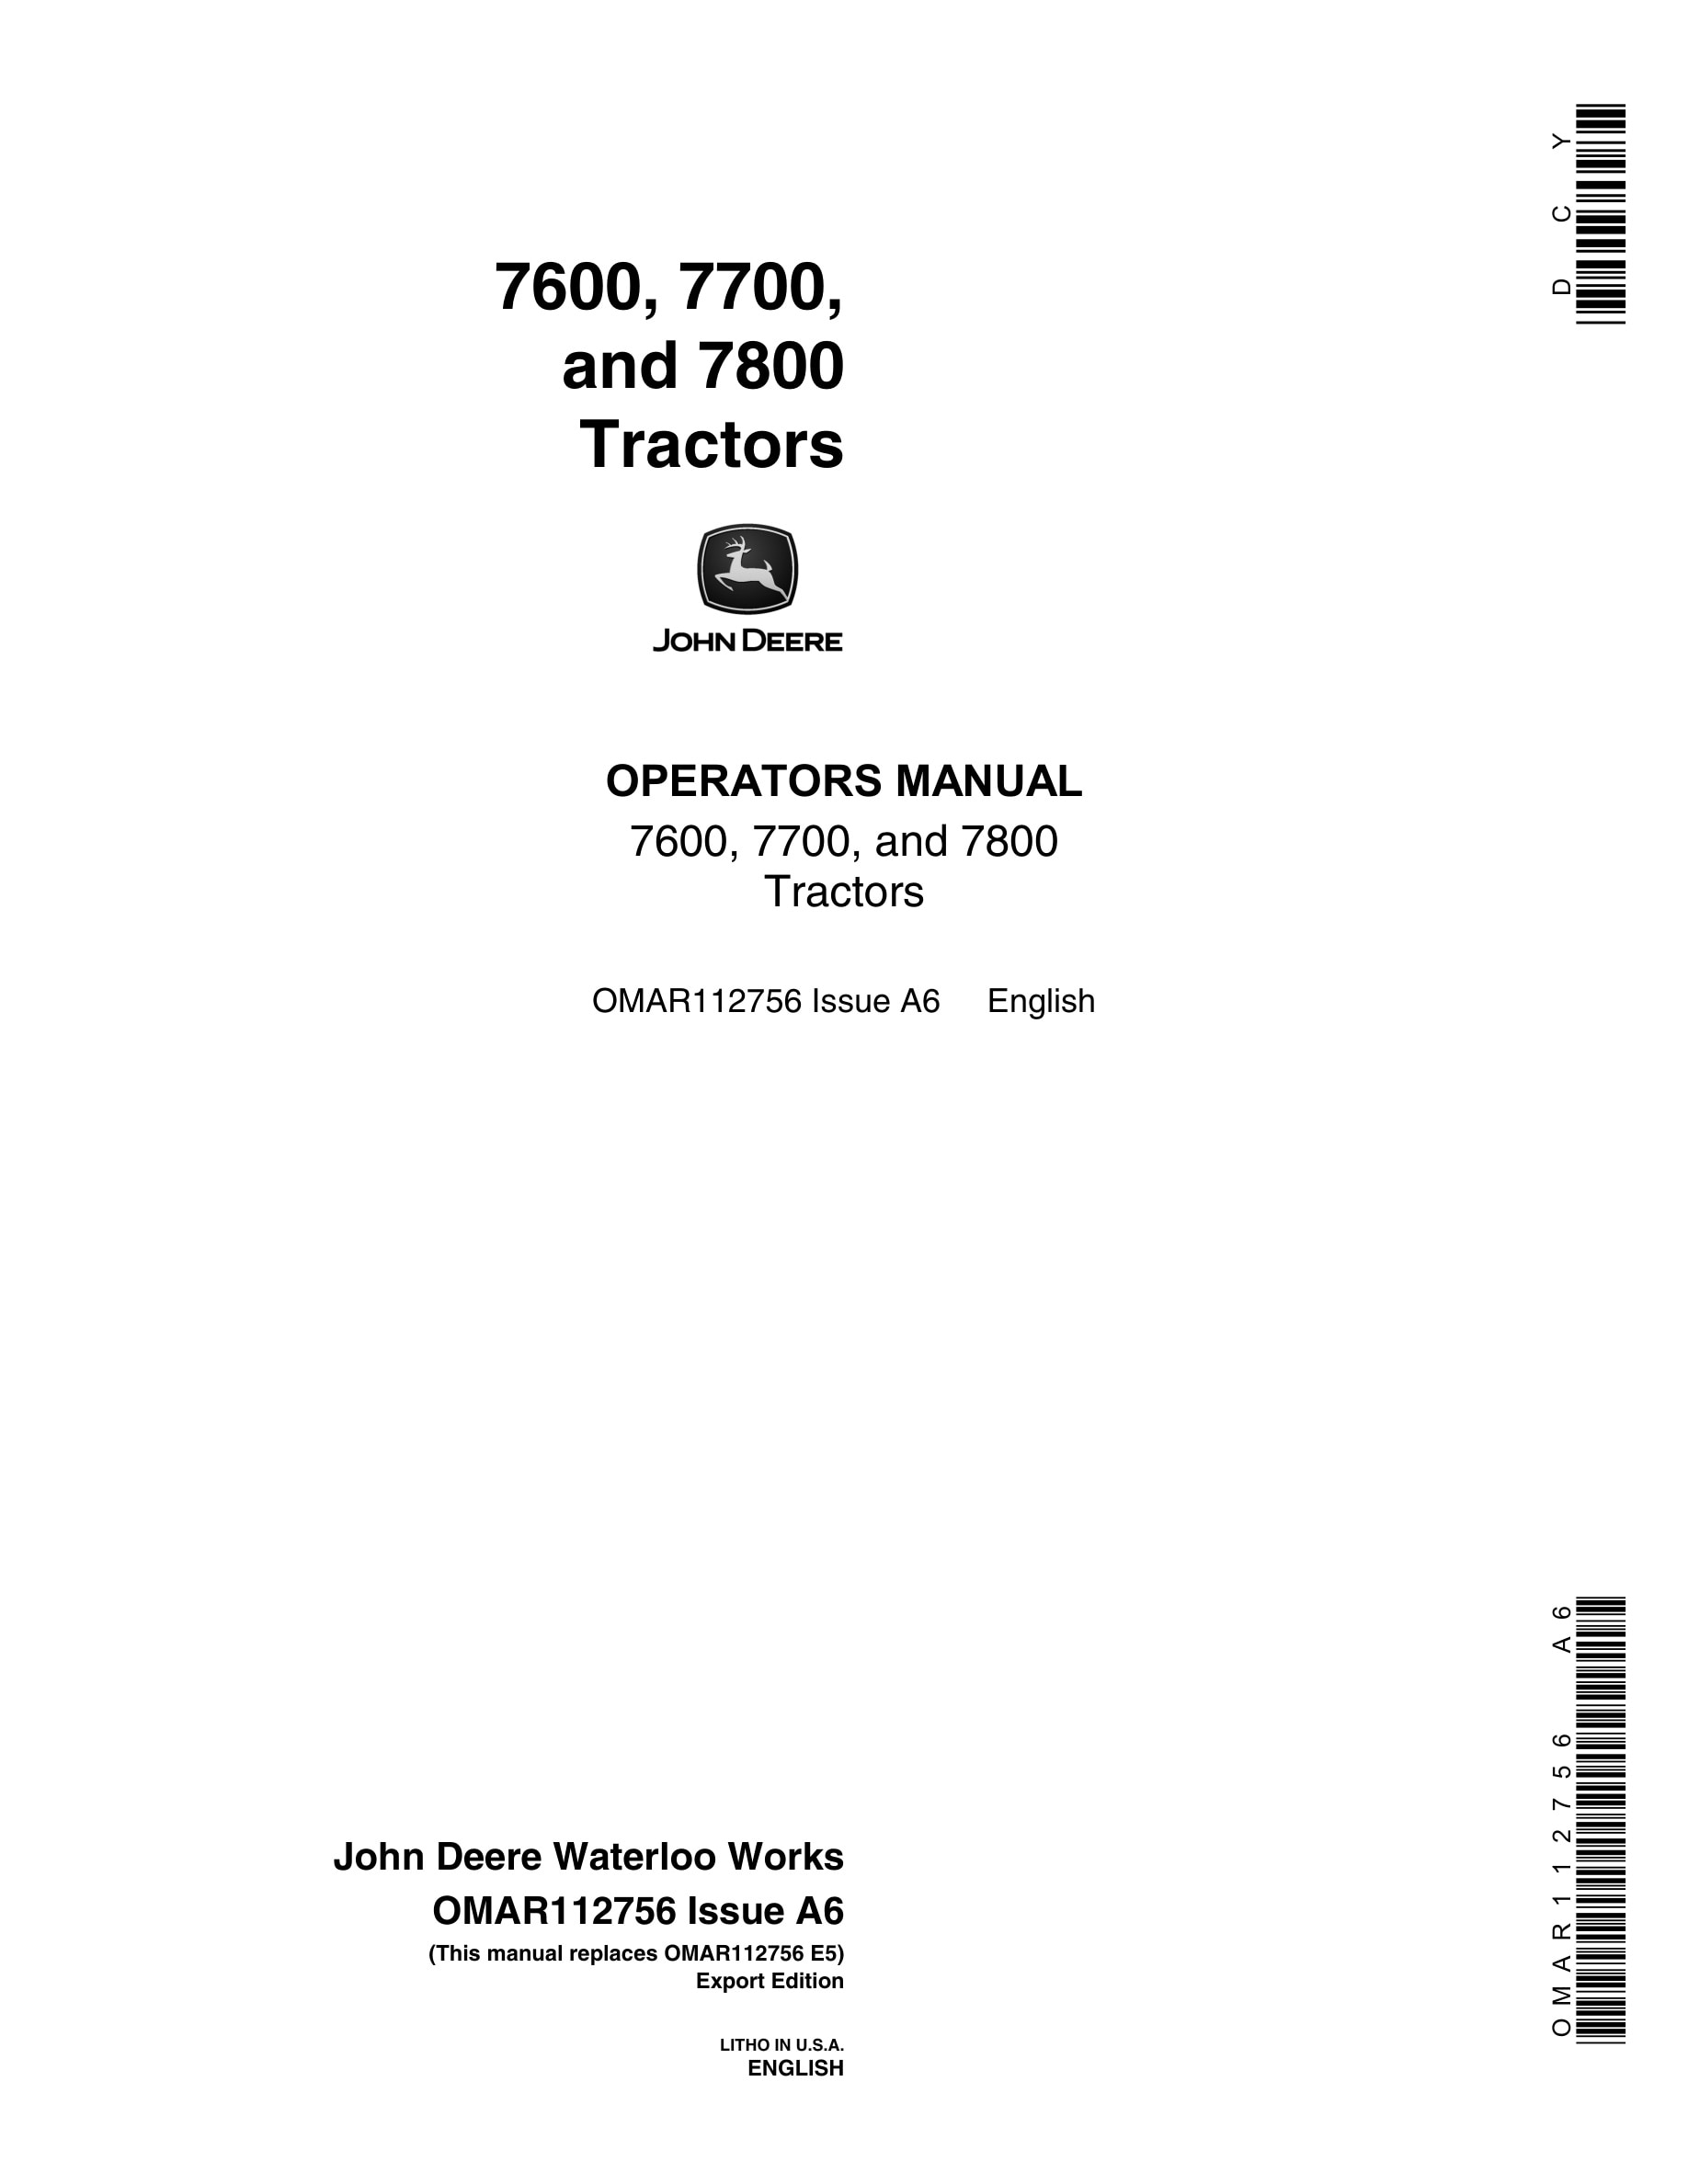 John Deere 7600, 7700, And 7800 Tractors Operator Manuals OMAR112756-1